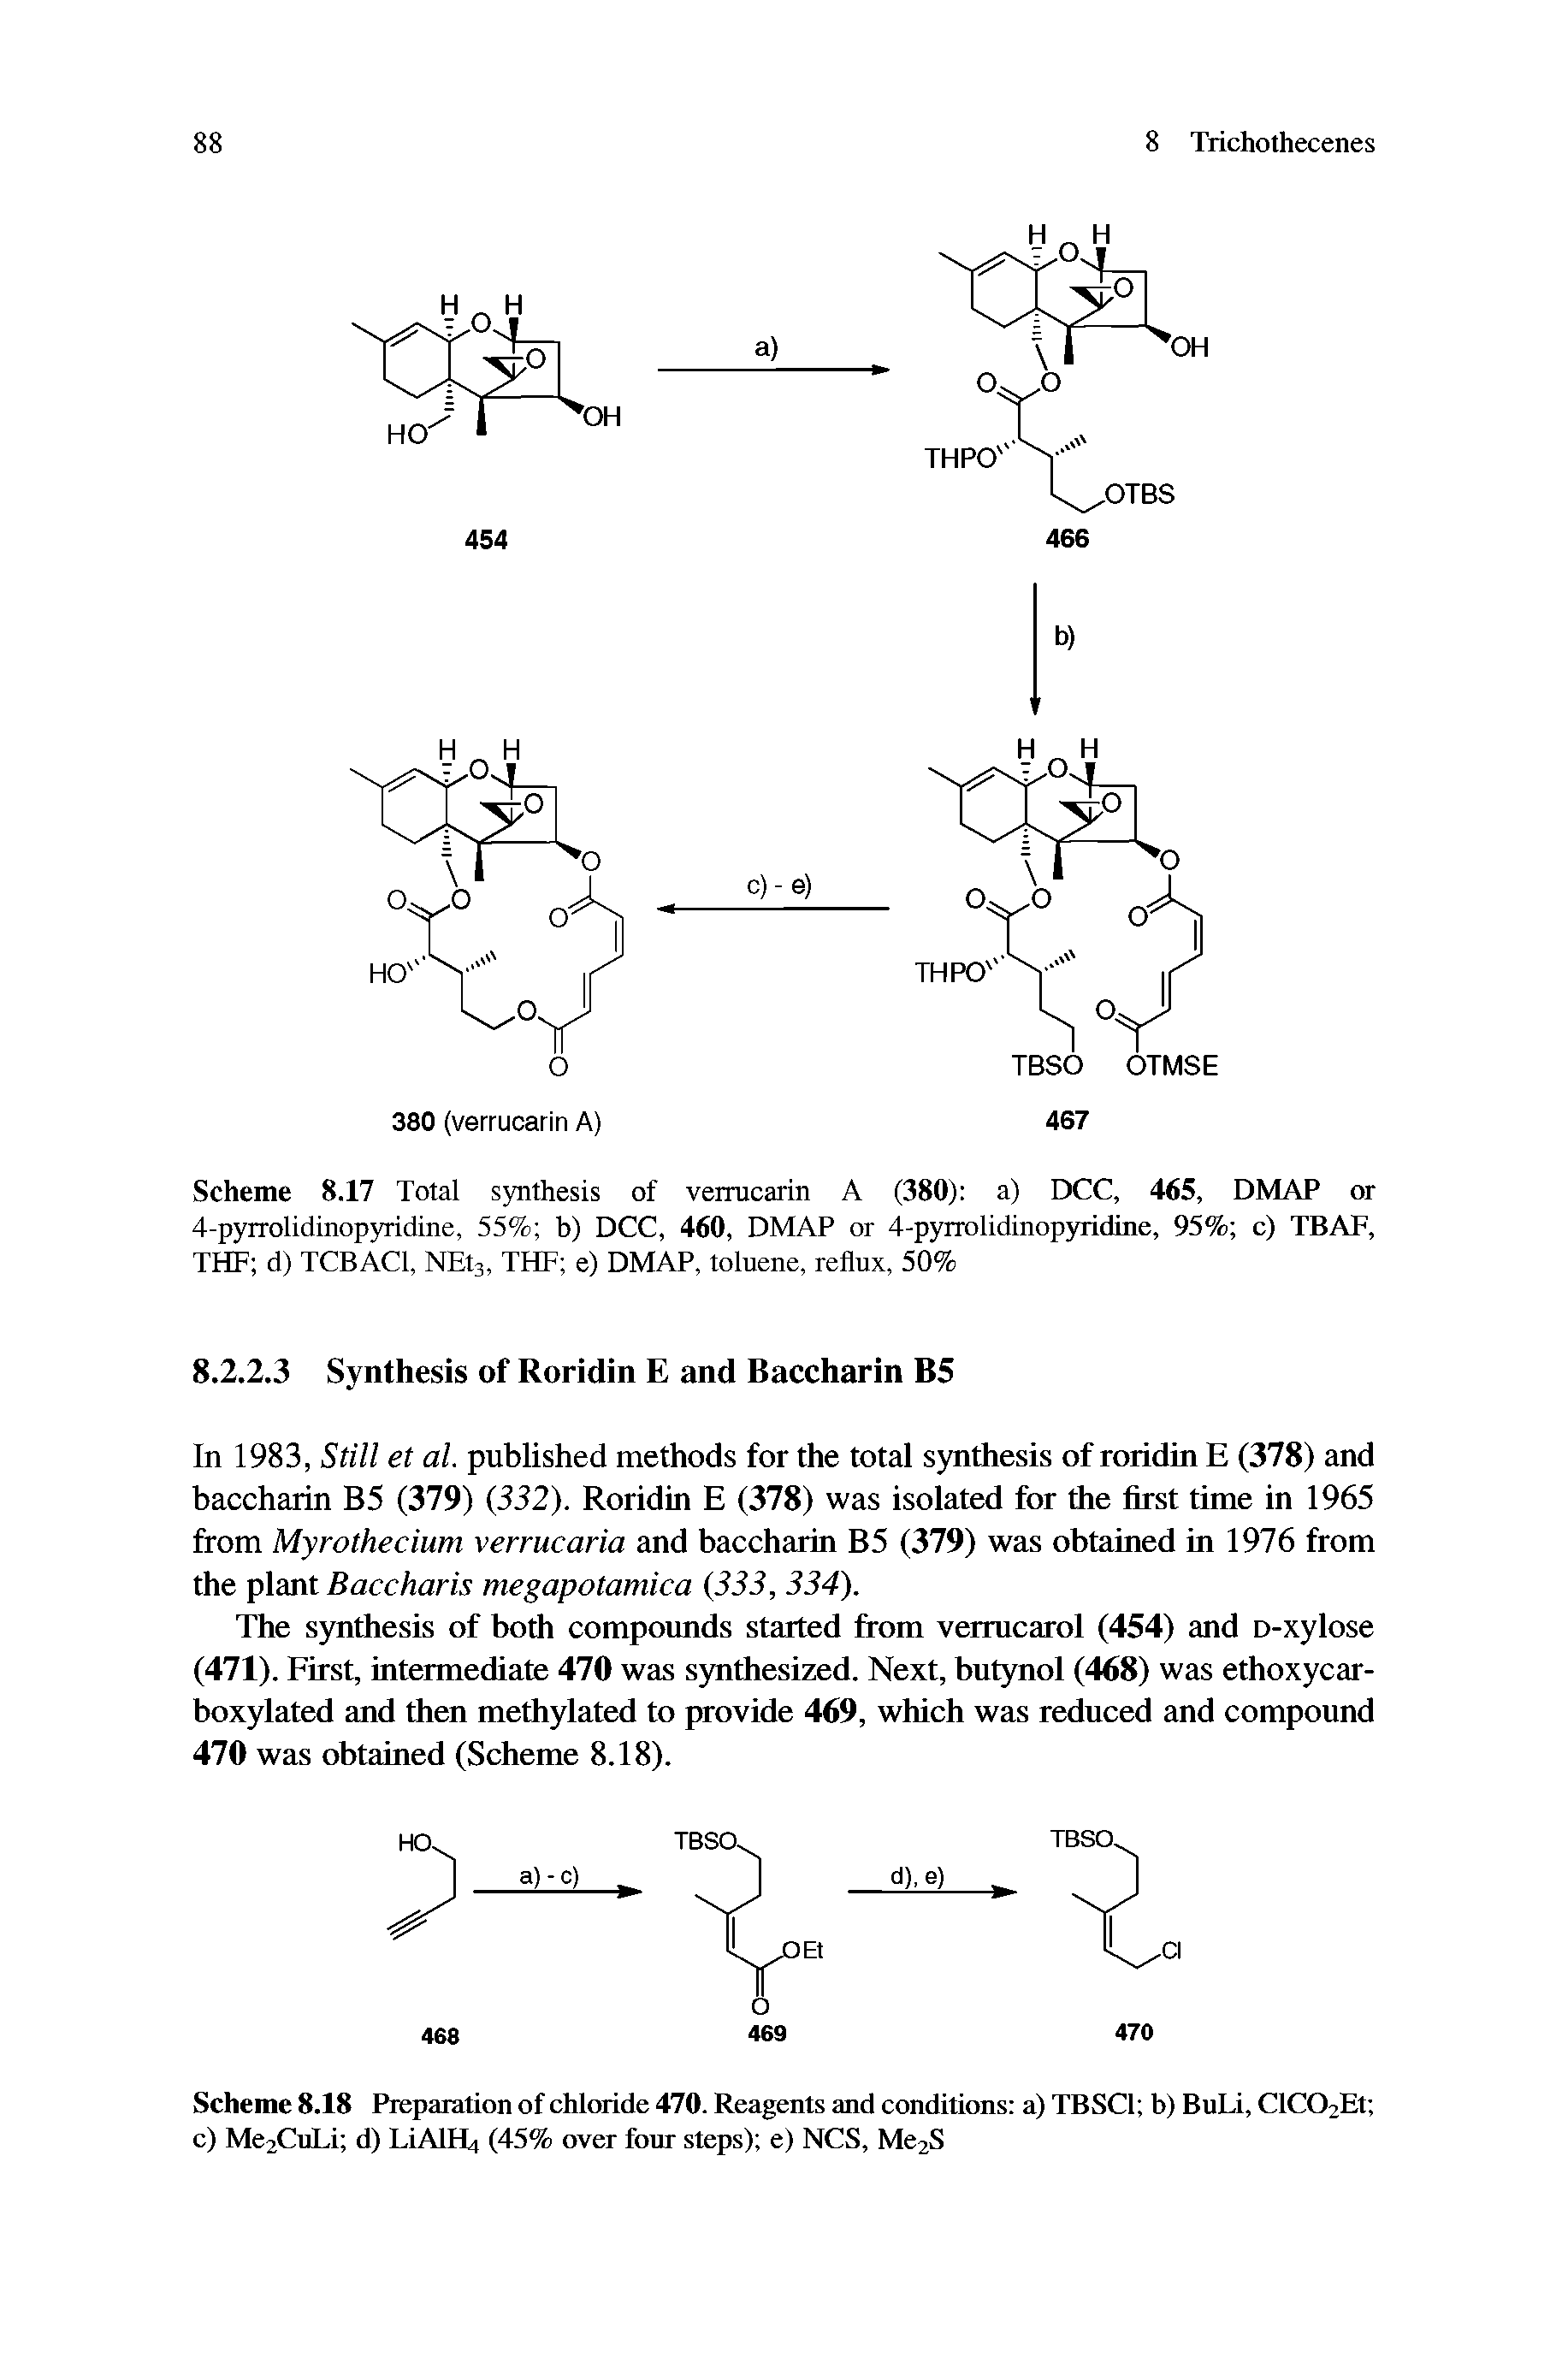 Scheme 8.17 Total synthesis of verrucarin A (380) a) DCC, 465, DMAP or 4-pyrrolidmopyridine, 55% b) DCC, 460, DMAP or 4-pyrrolidinopyridine, 95% c) TBAF, THF d) TCBACl, NEtj, THF e) DMAP, toluene, reflux, 50%...